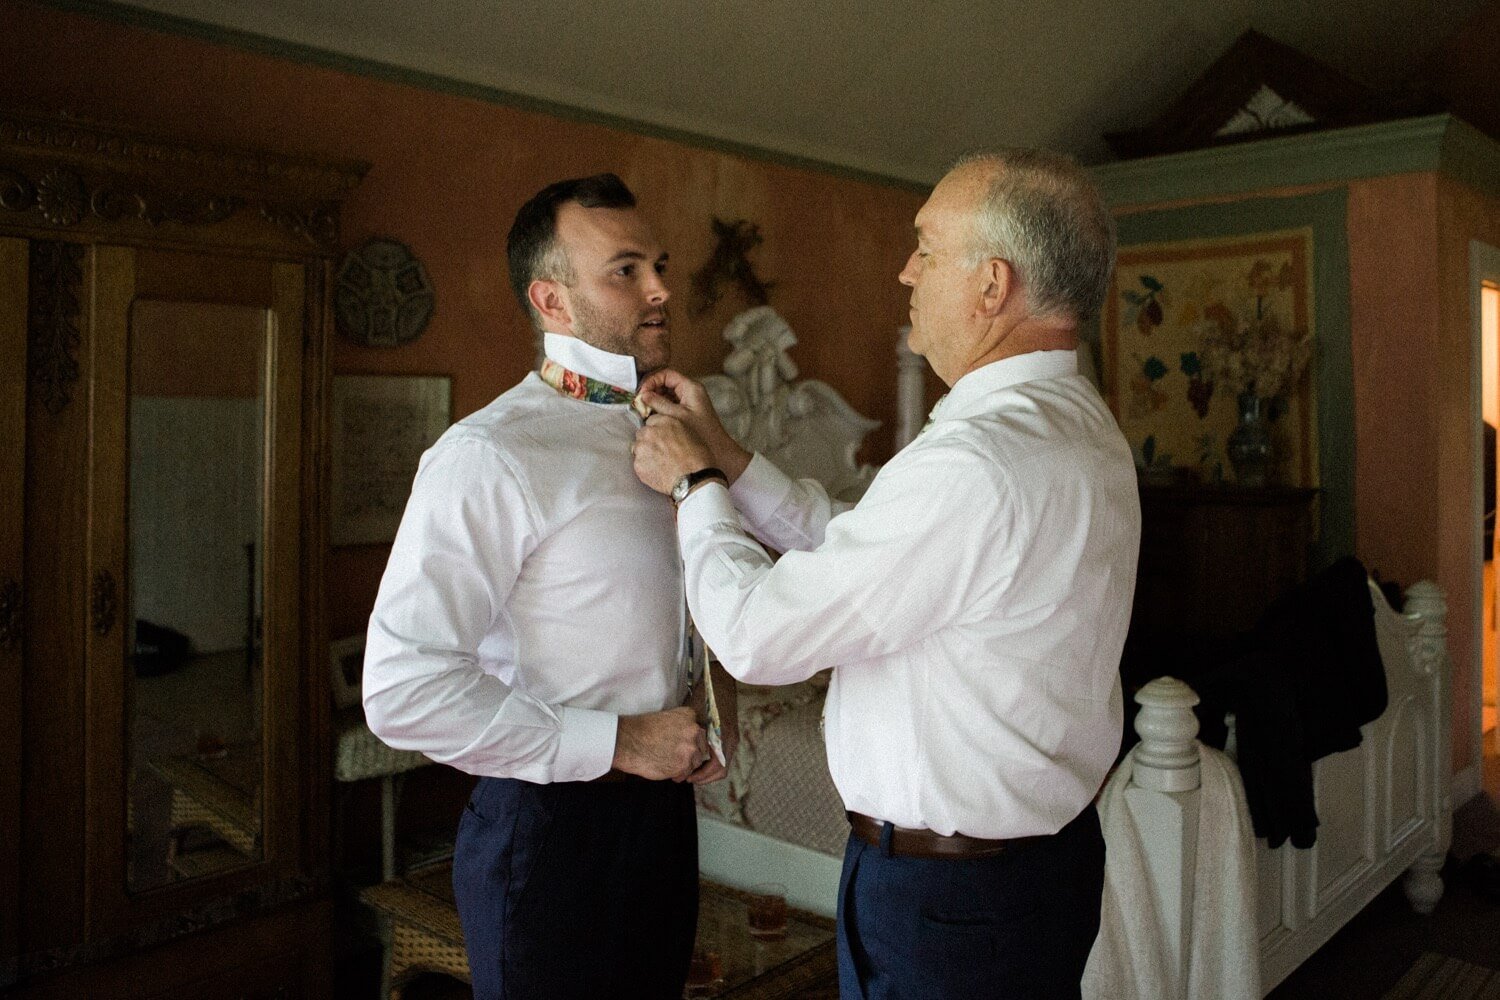 019_Mount Hood Organic Farms Wedding-9133_Dad helps groom put on tie.jpg